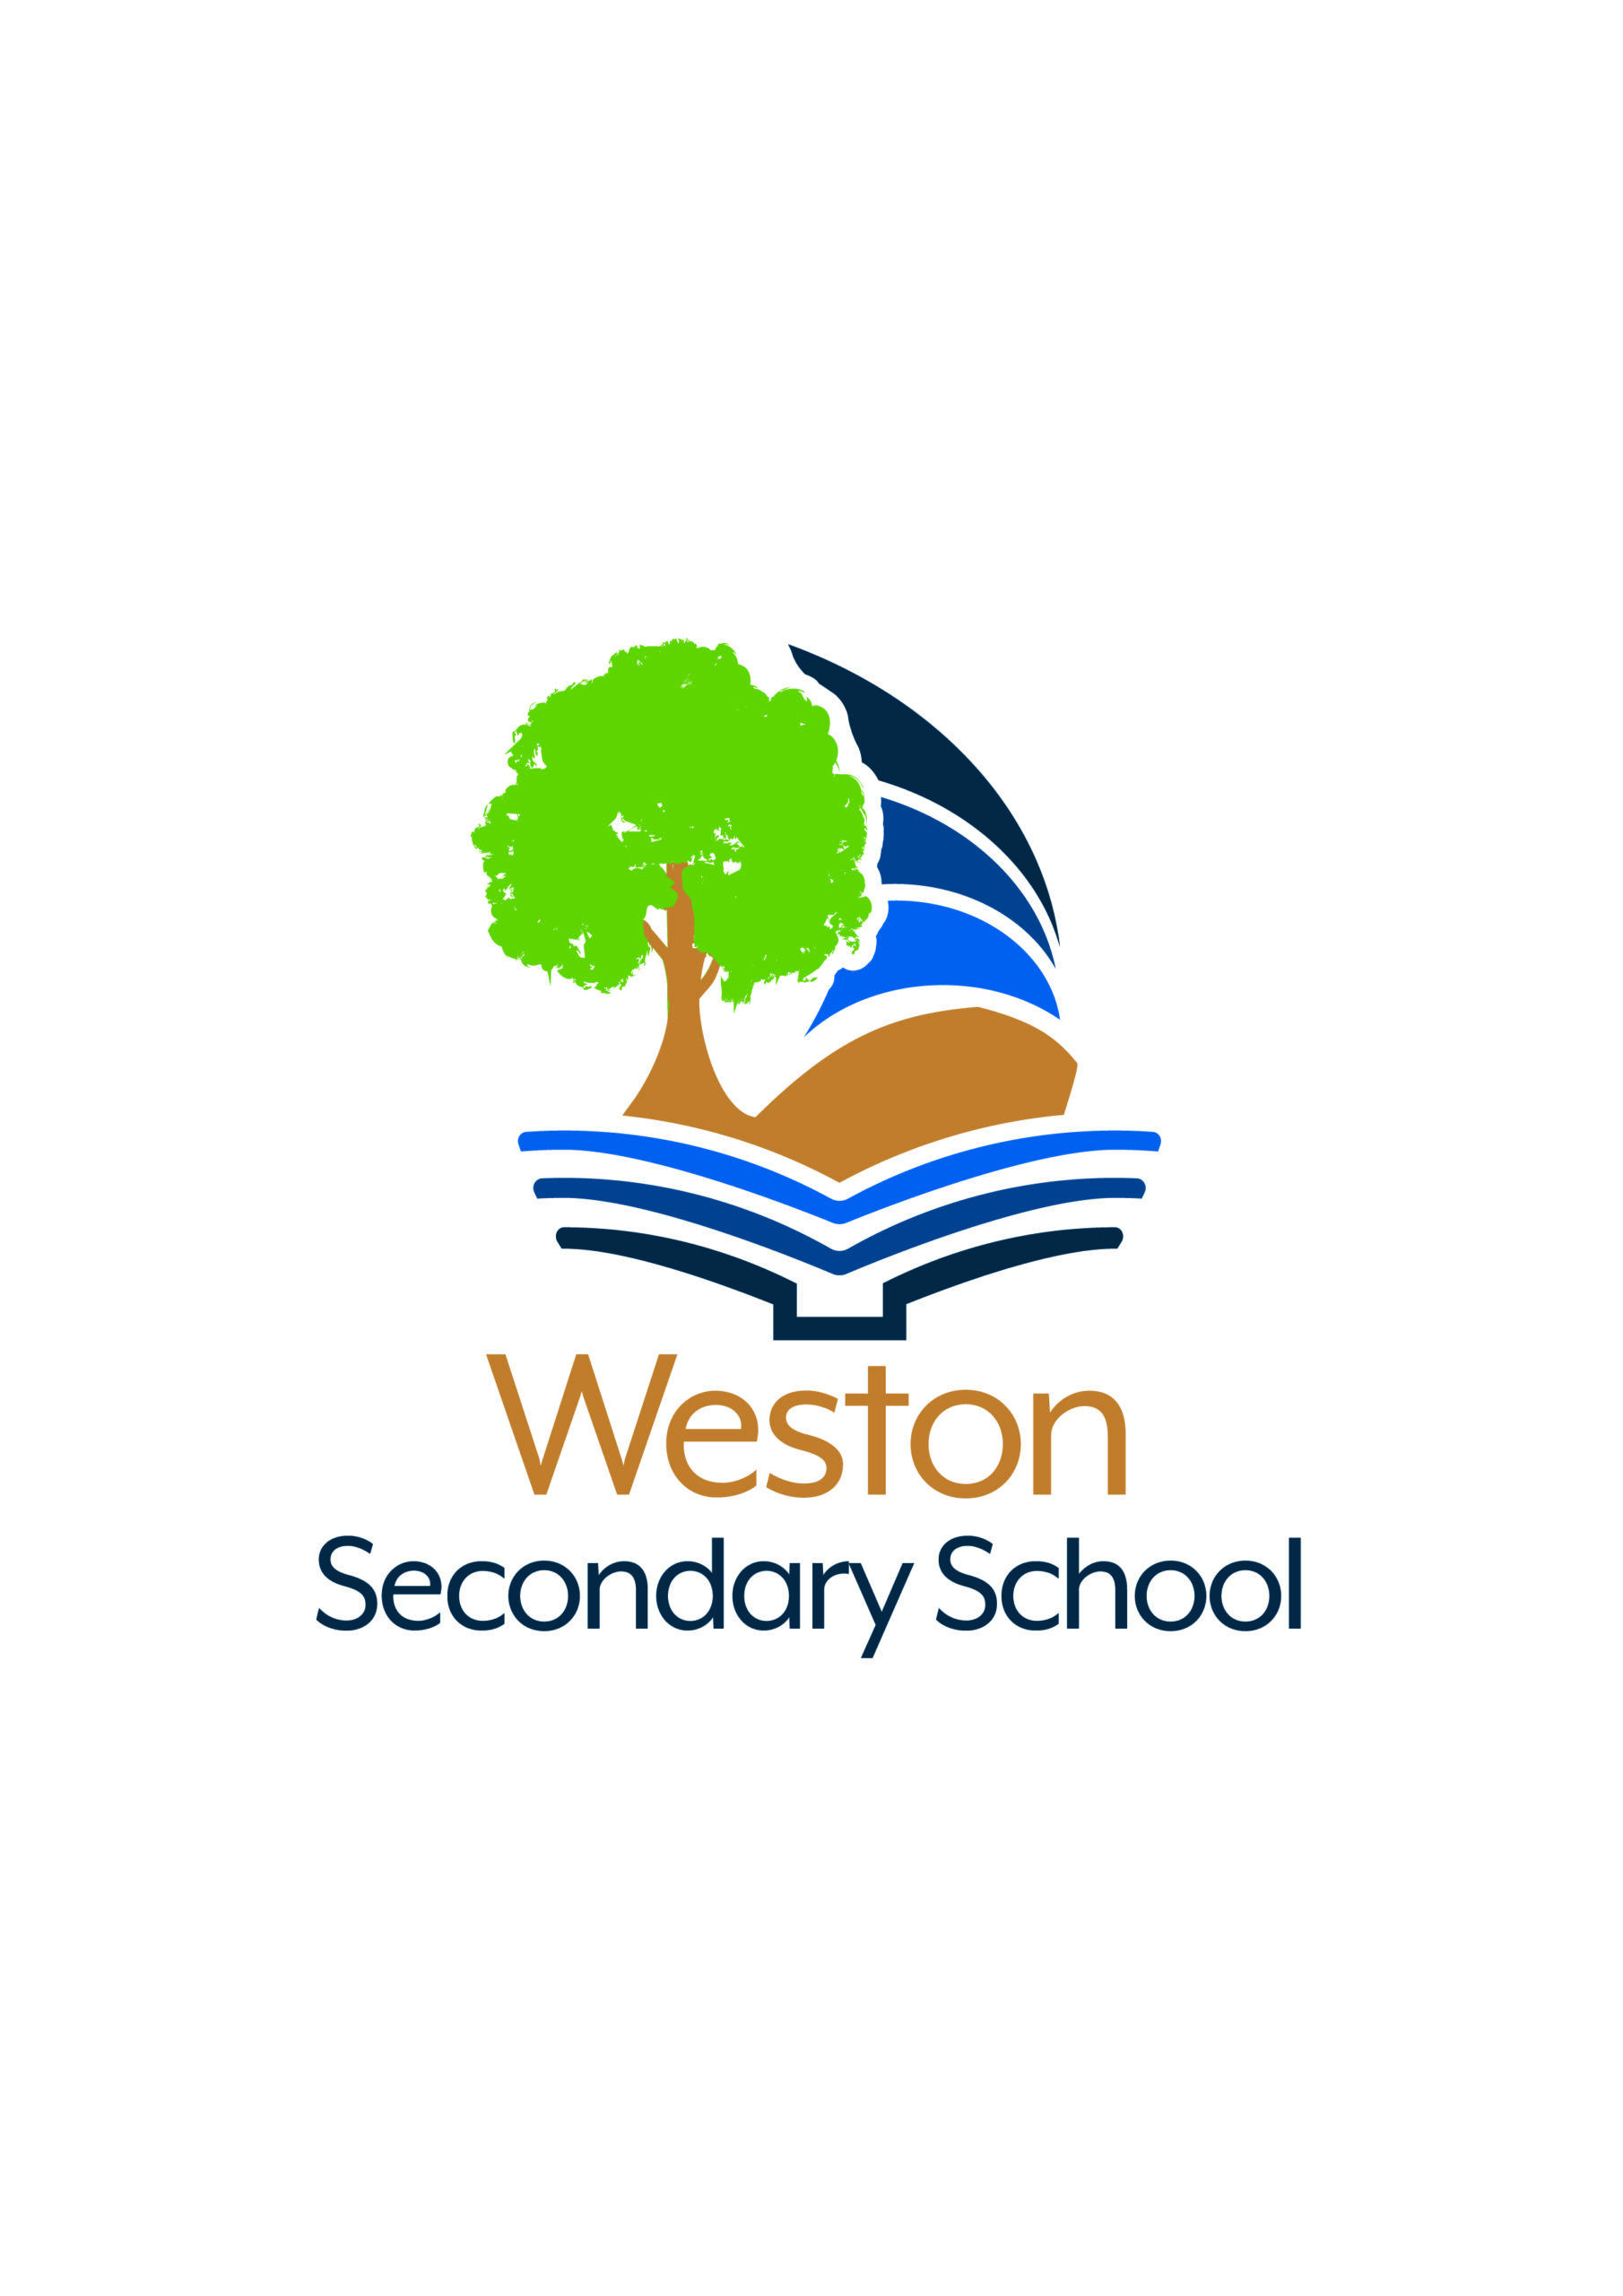 Weston Secondary School